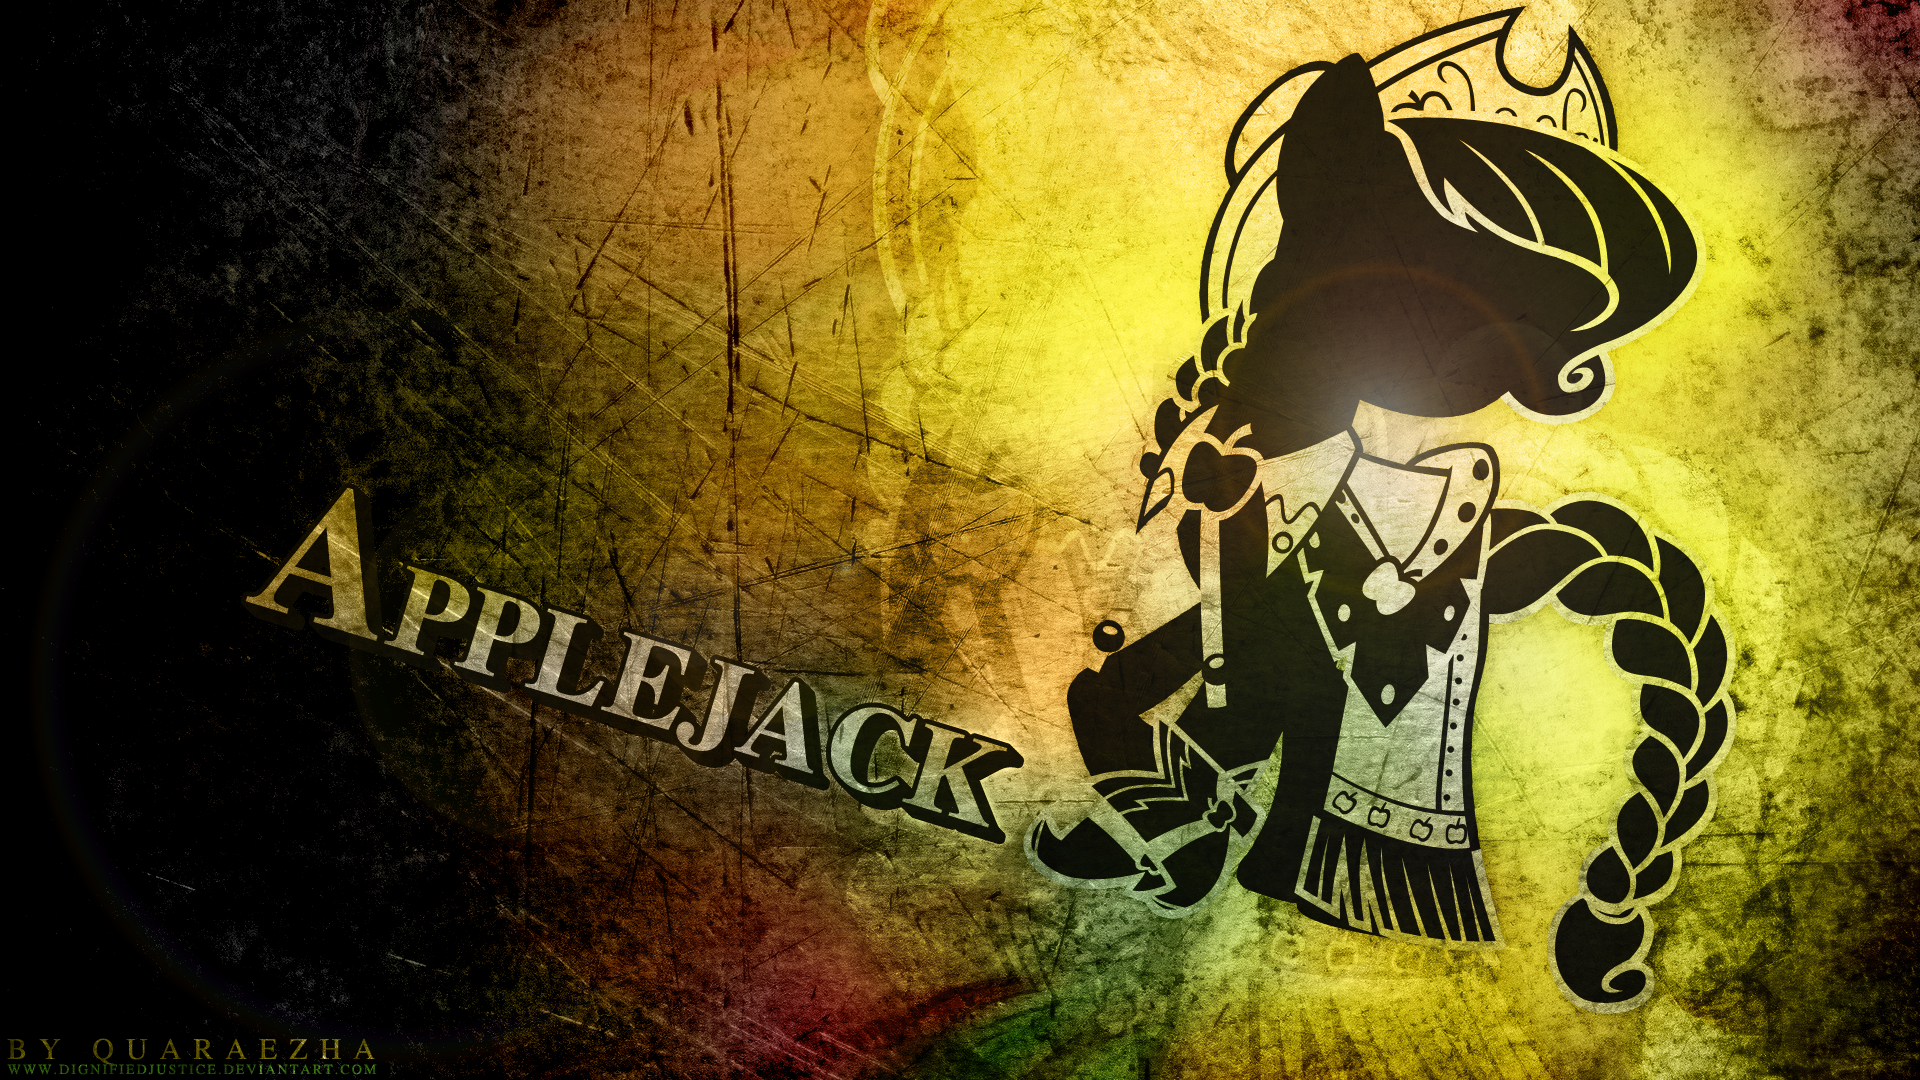 Monochrome Grunge | Applejack by Paradigm-Zero